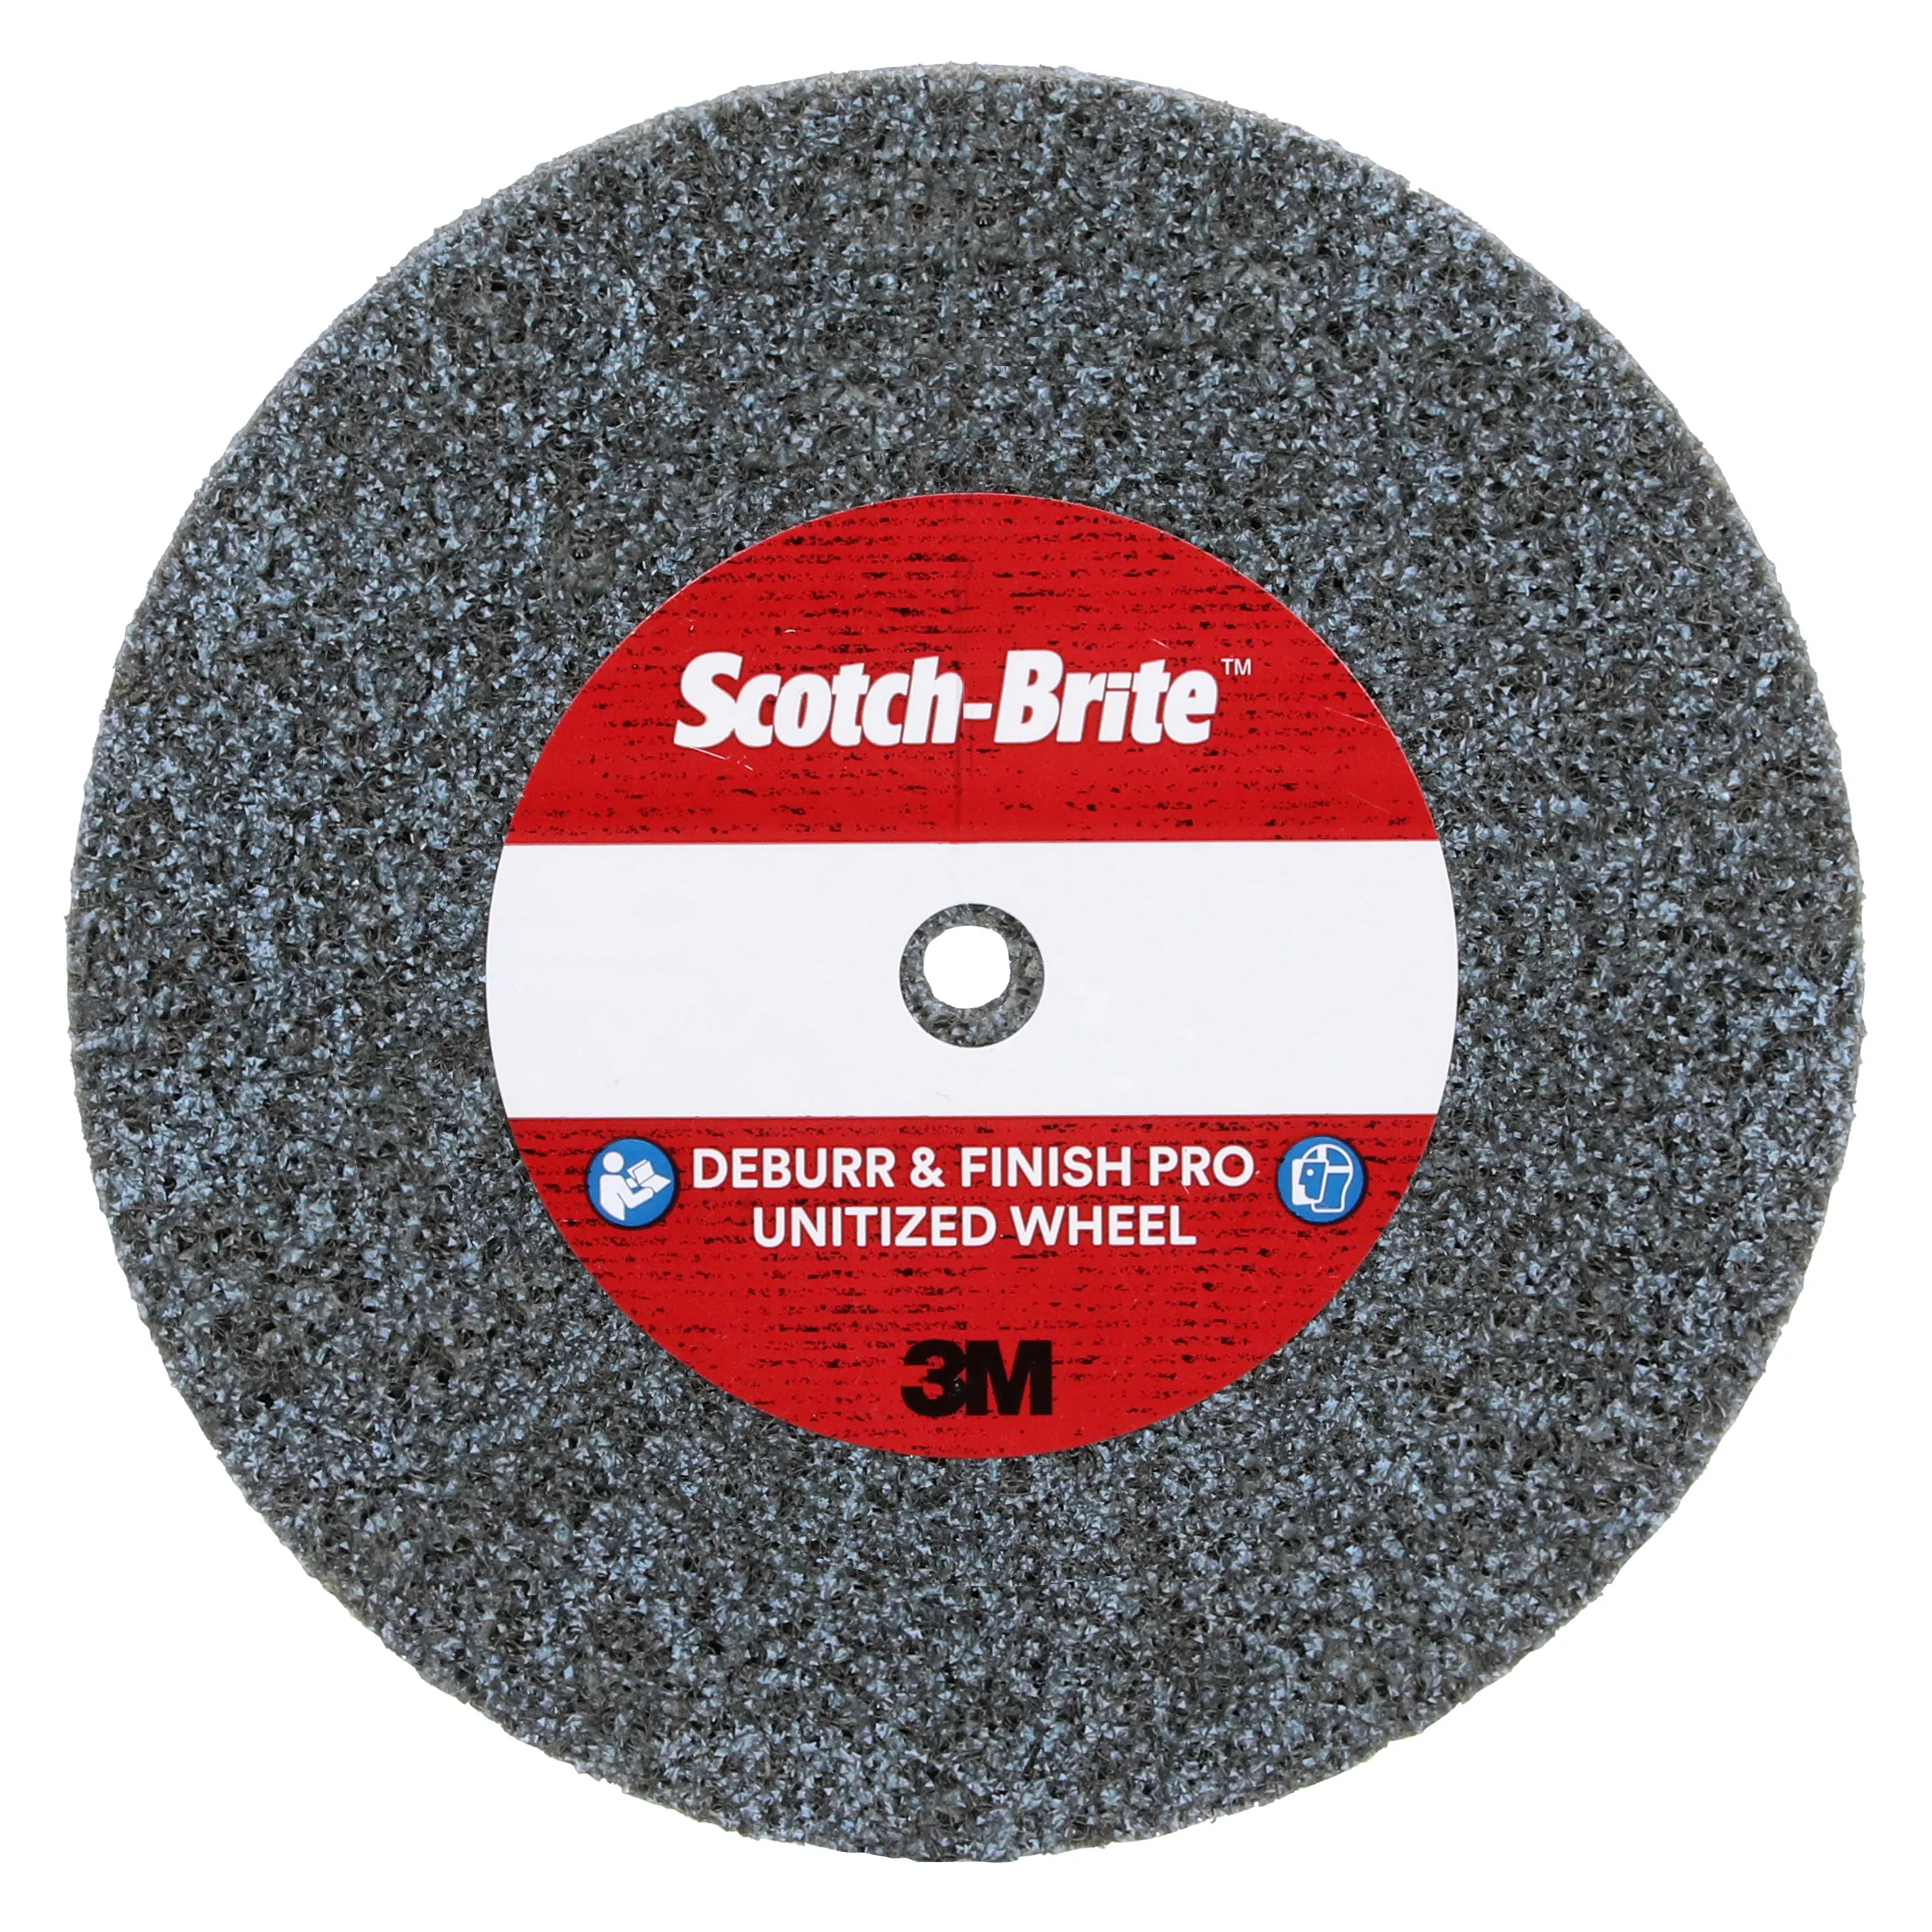 SKU 7100110912 | Scotch-Brite™ Deburr & Finish Pro Unitized Wheel